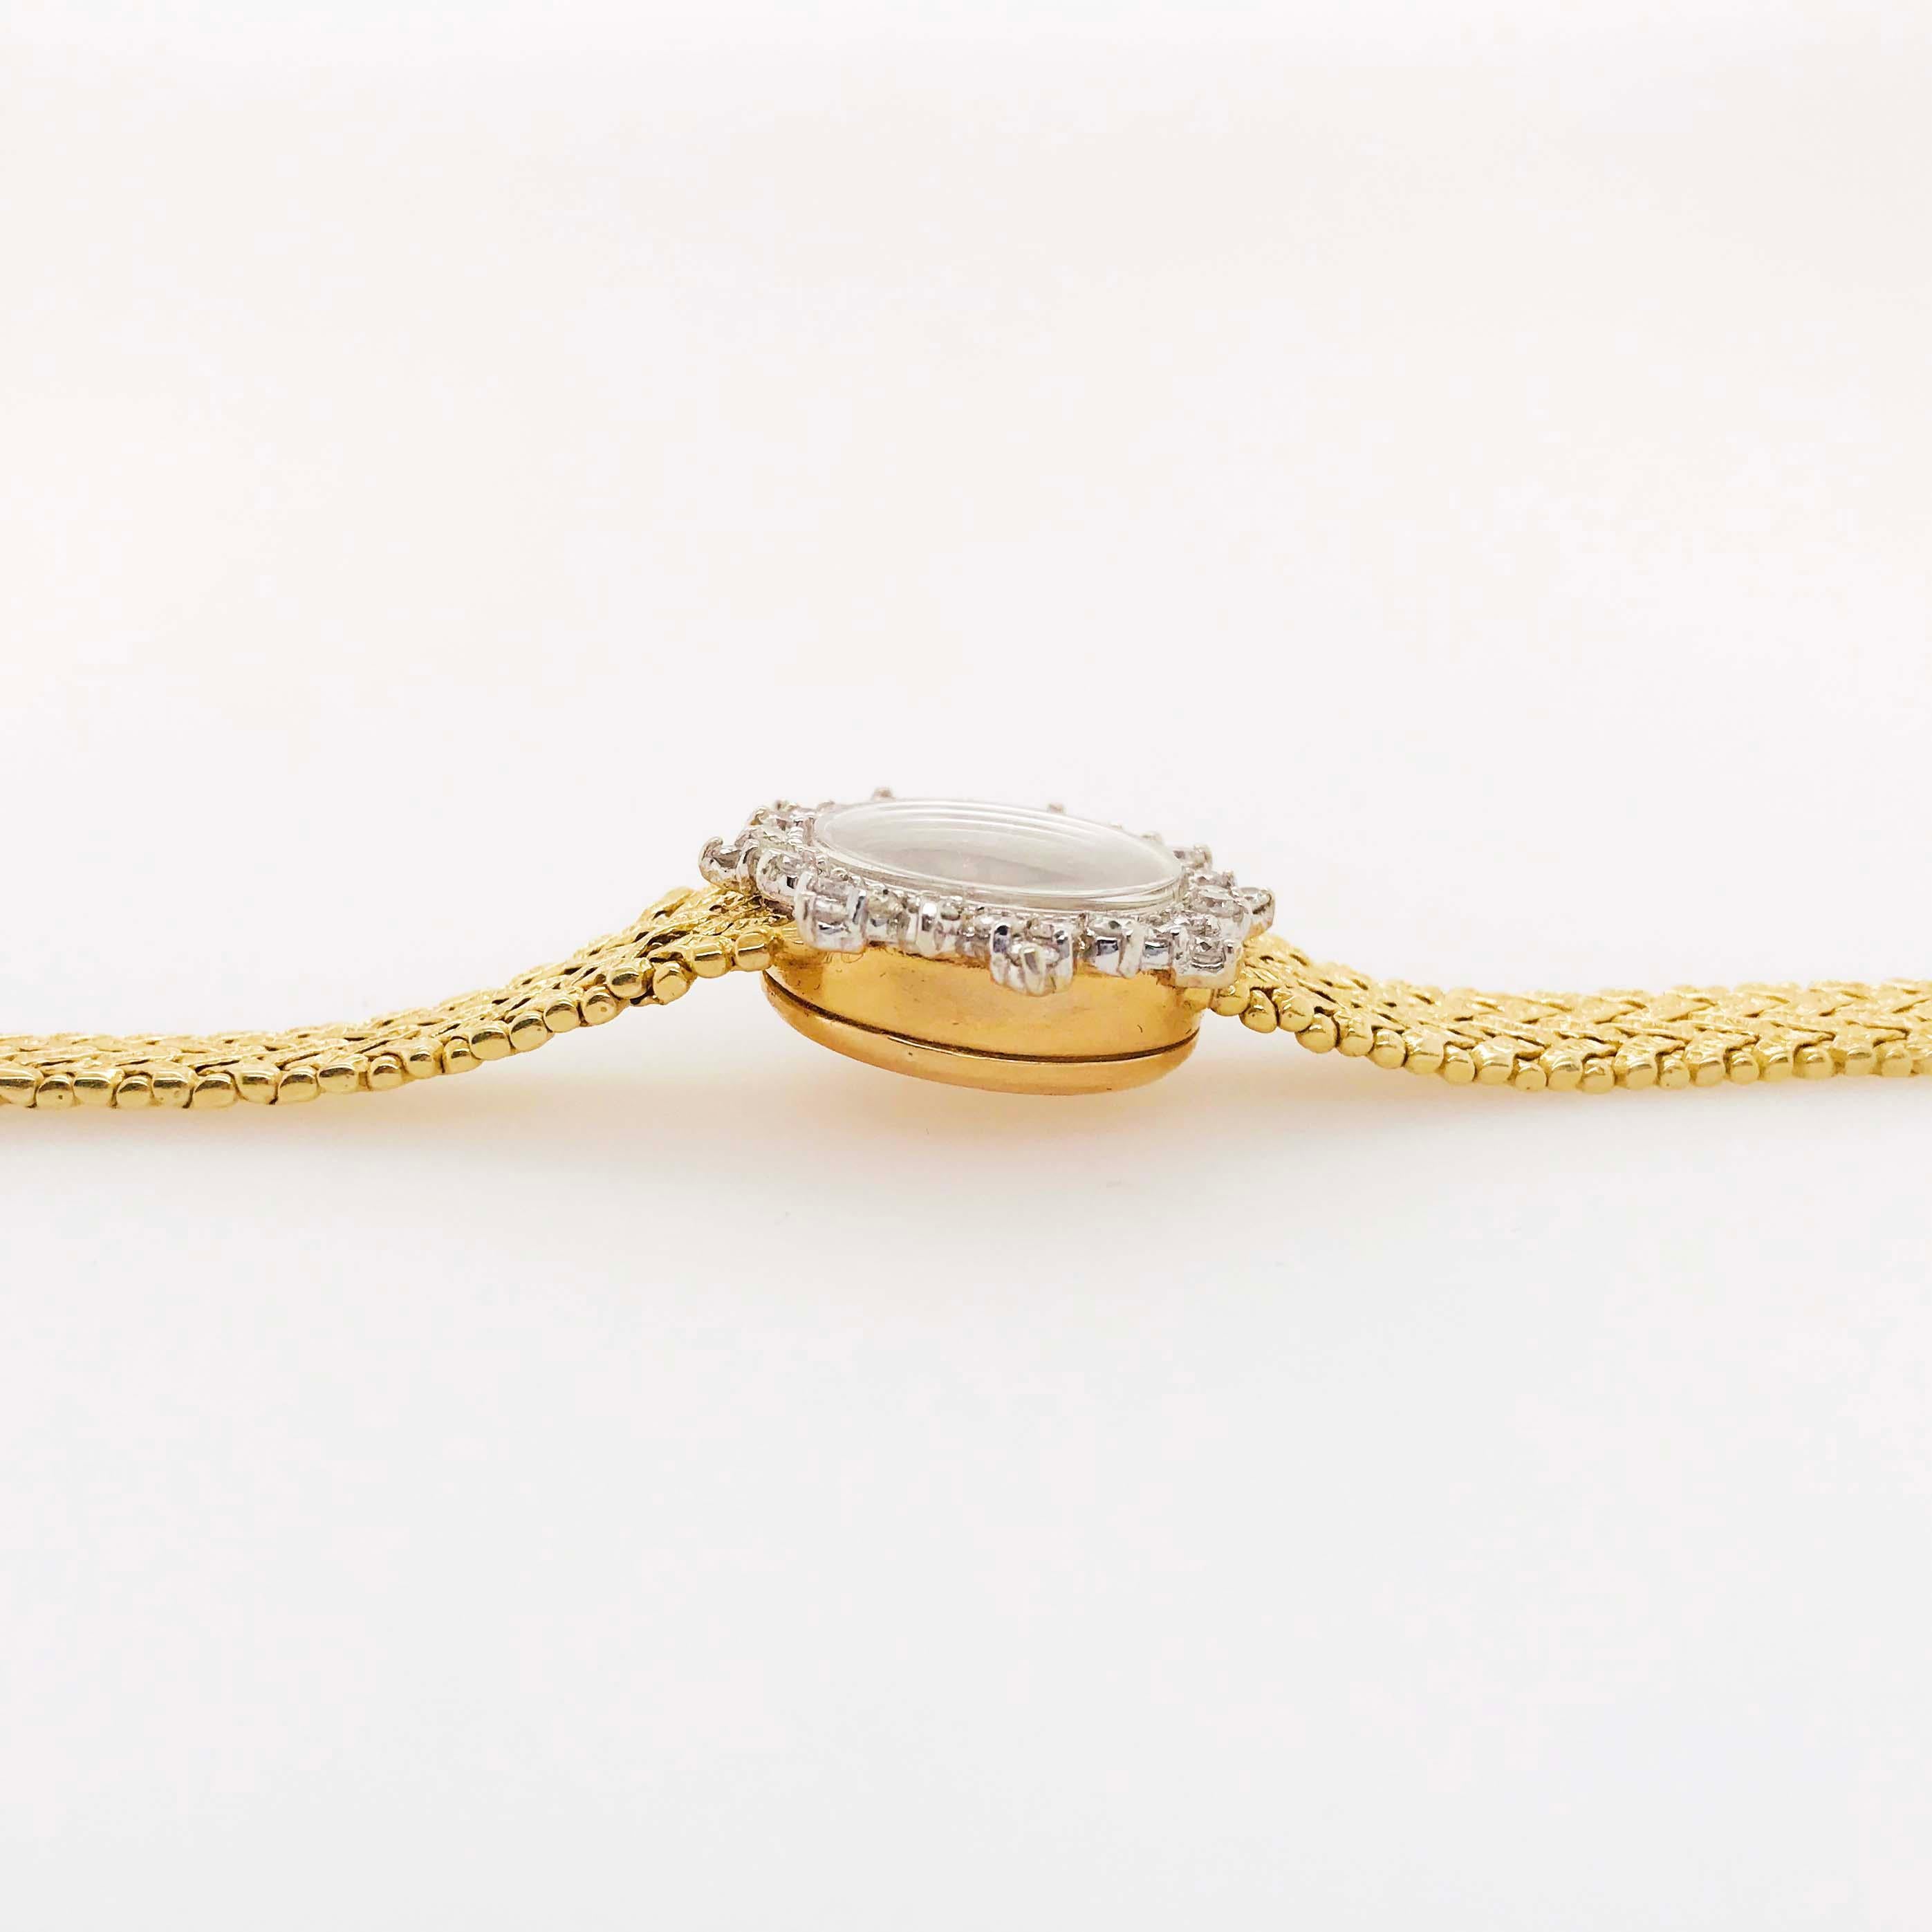 Ladies Dress Watch, Geneve Quartz 1.50 Carat Diamond Dial and Gold Textured Band 4